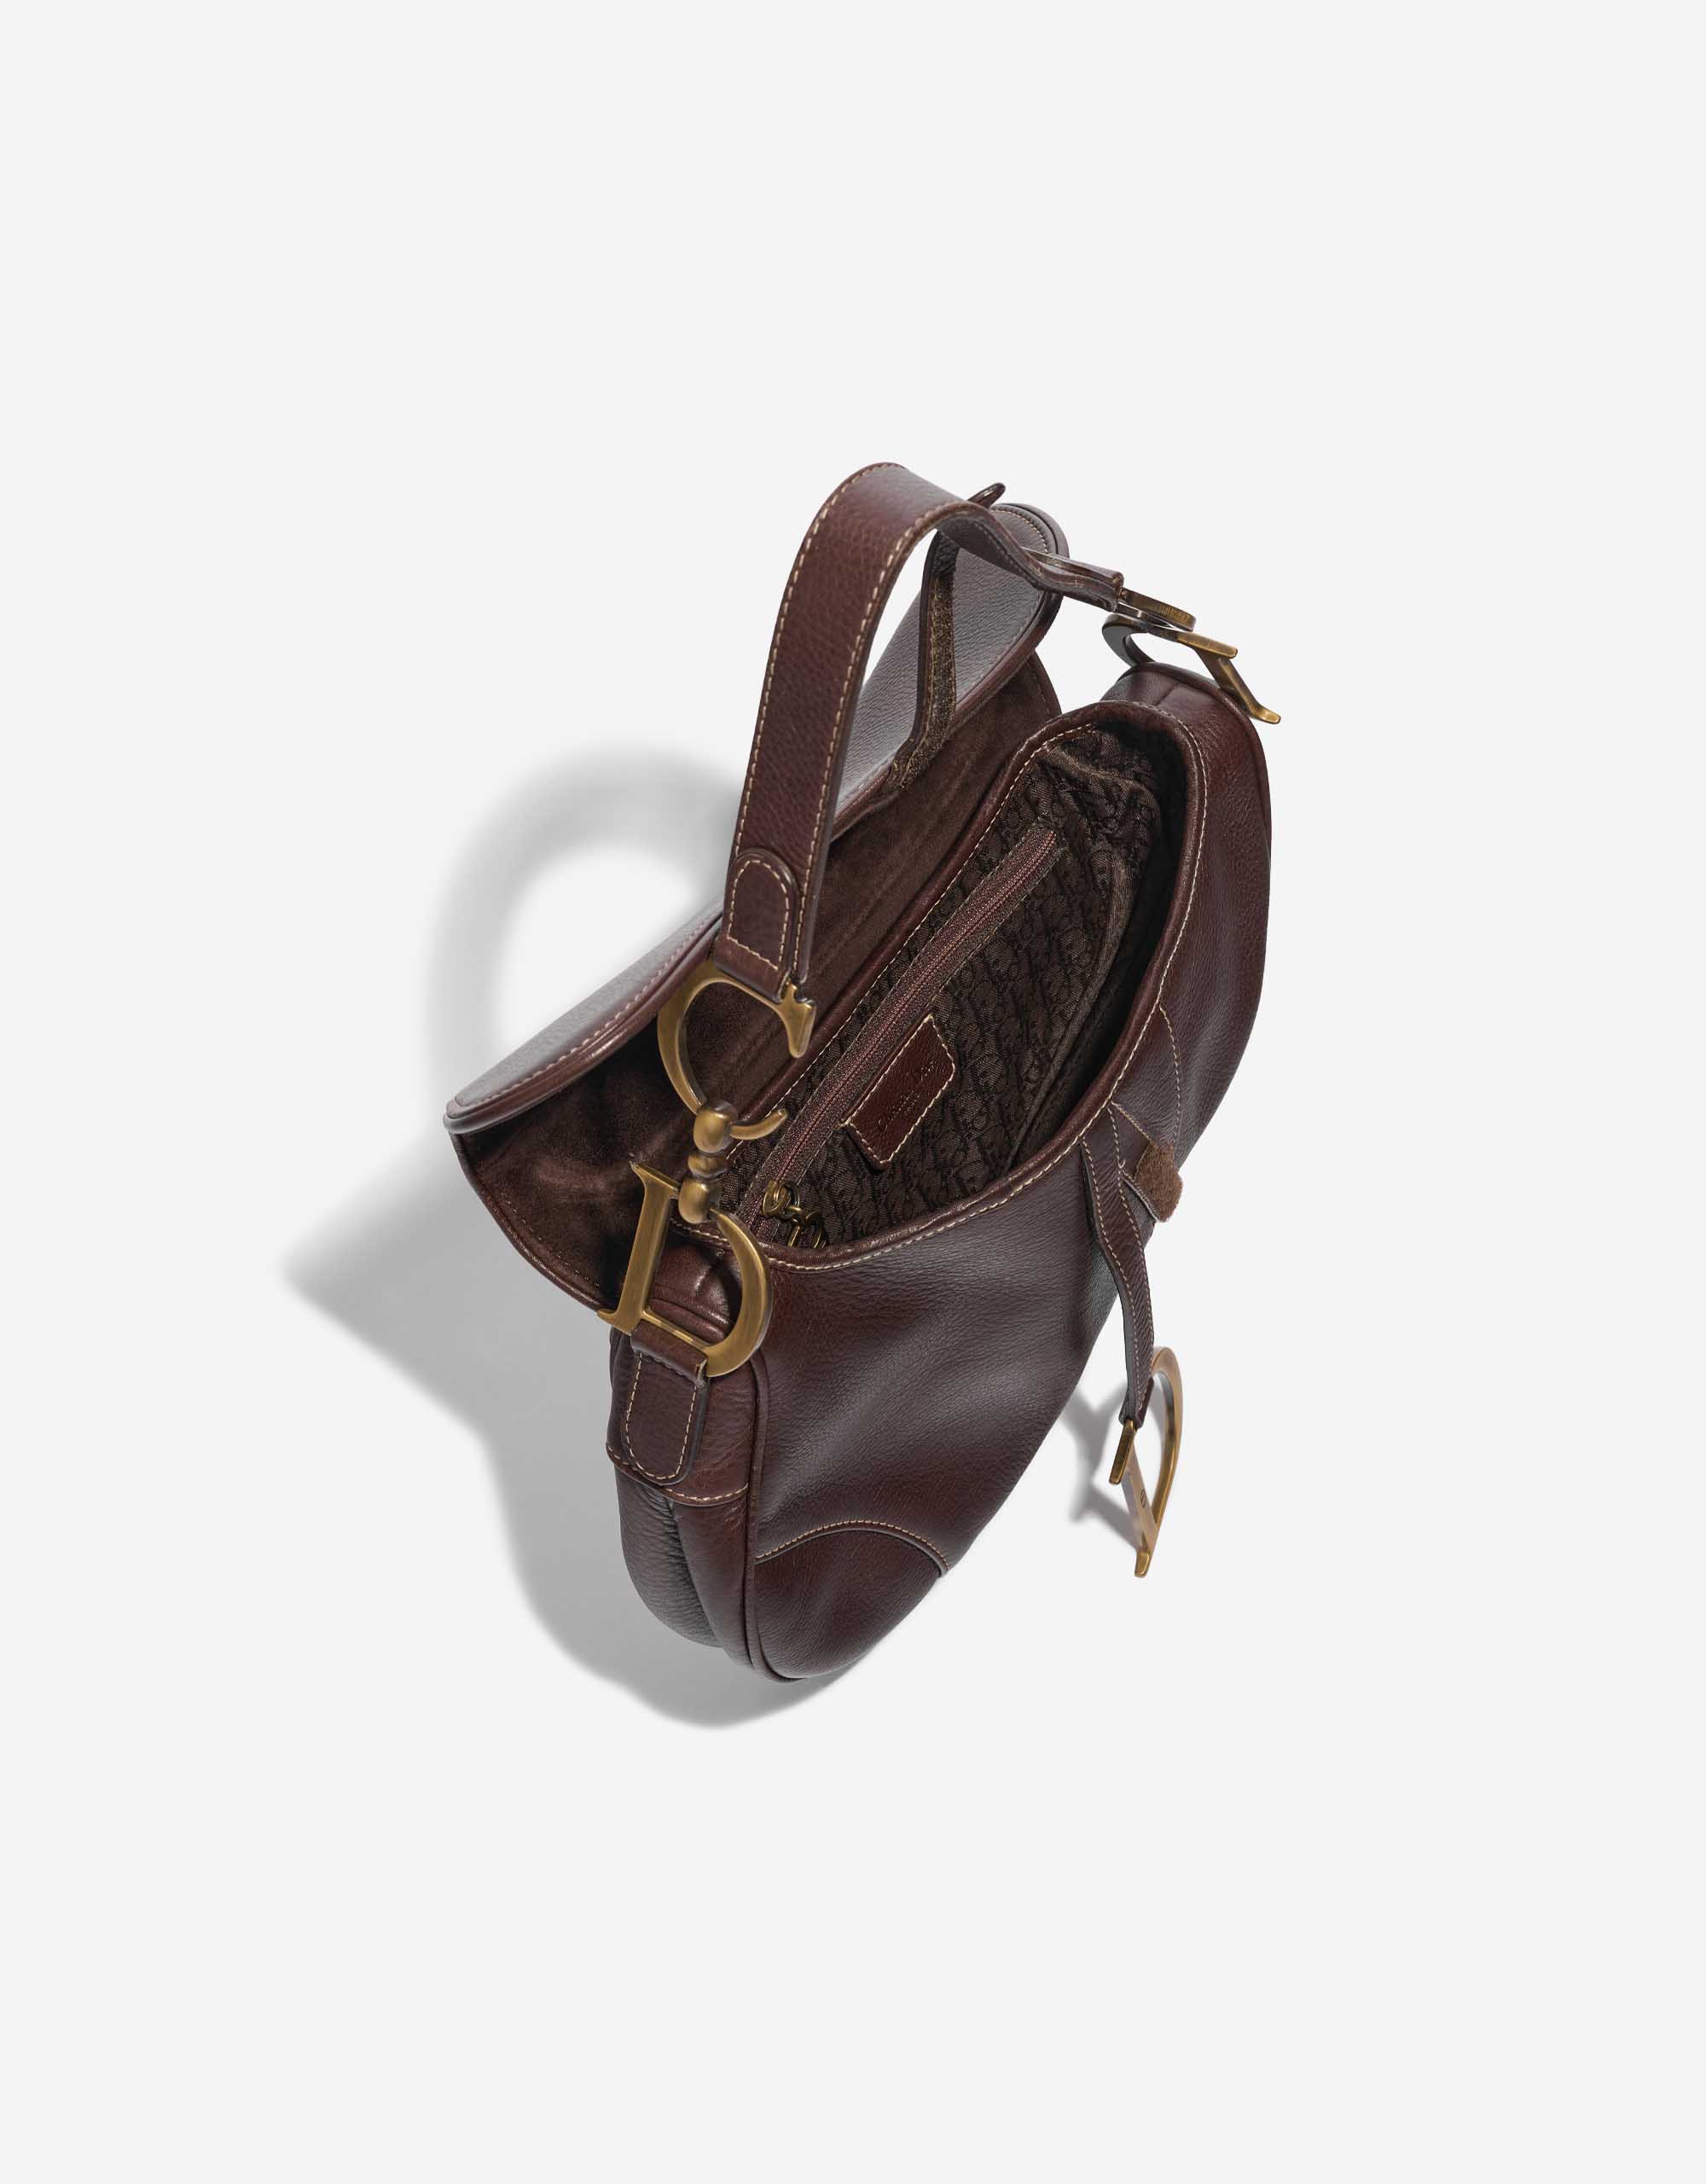 Pre-owned Dior bag Saddle Medium Calf Brown Brown Inside | Sell your designer bag on Saclab.com